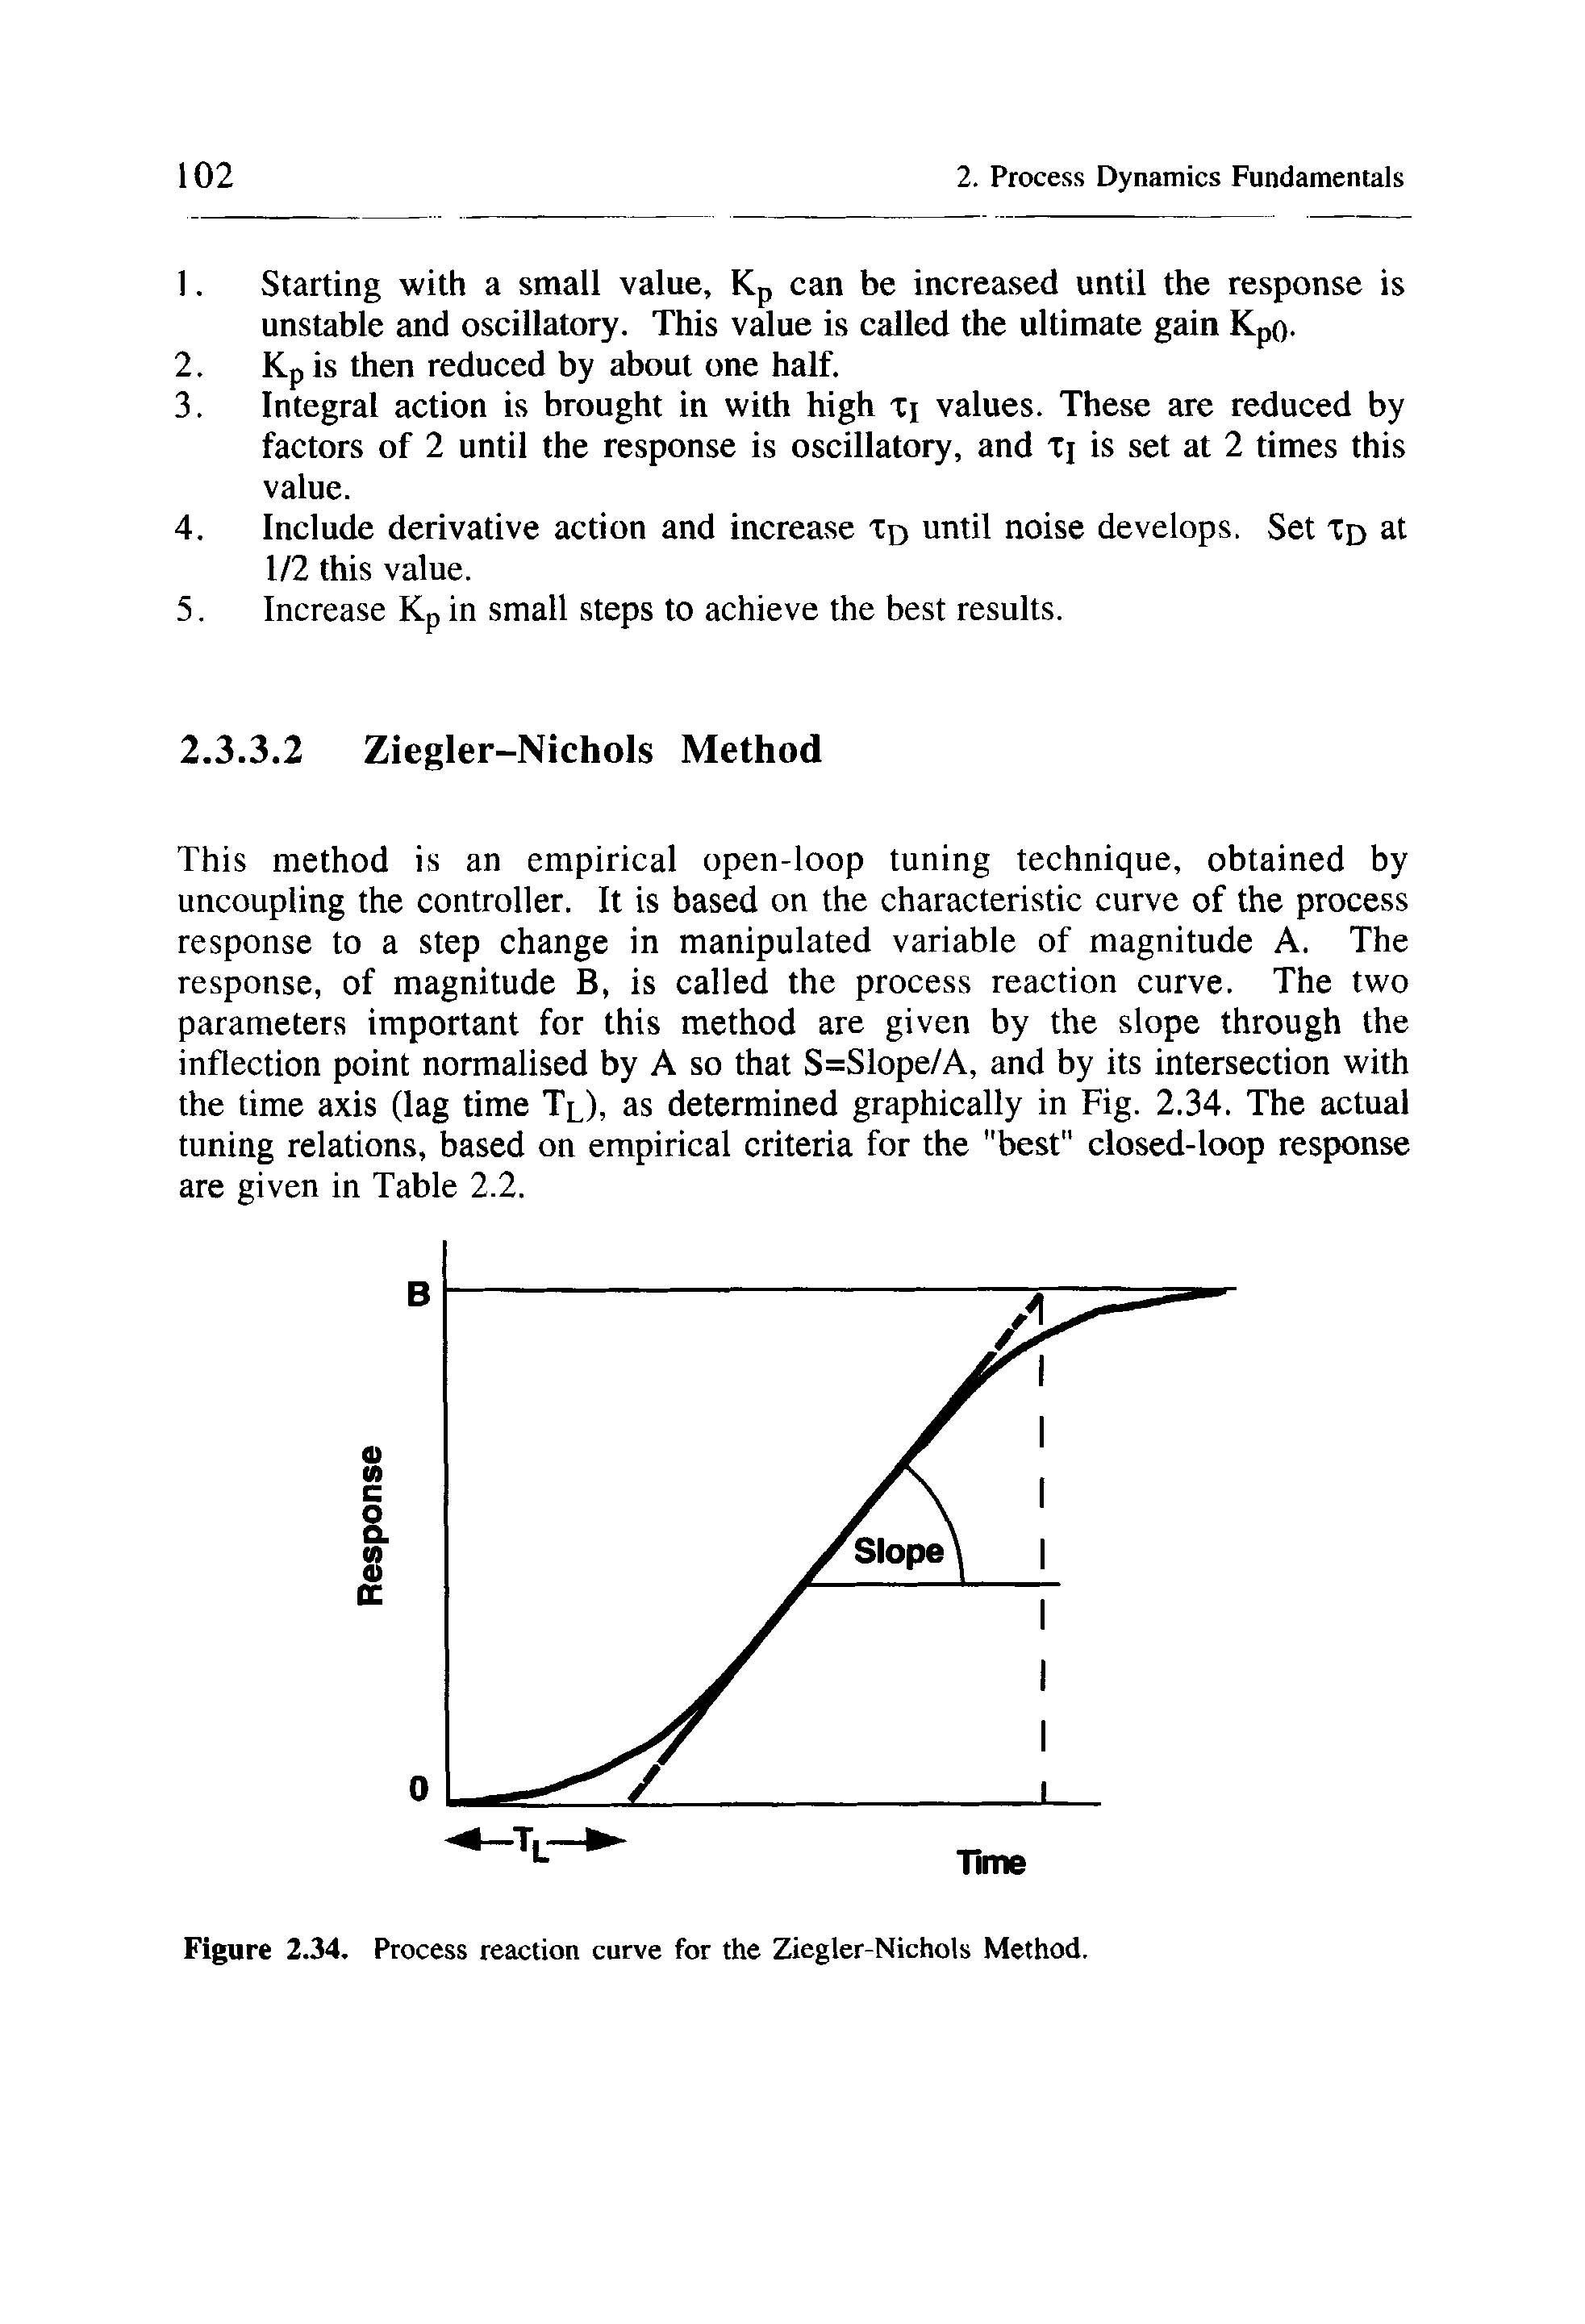 Figure 2.34. Process reaction curve for the Ziegler-Nichols Method.